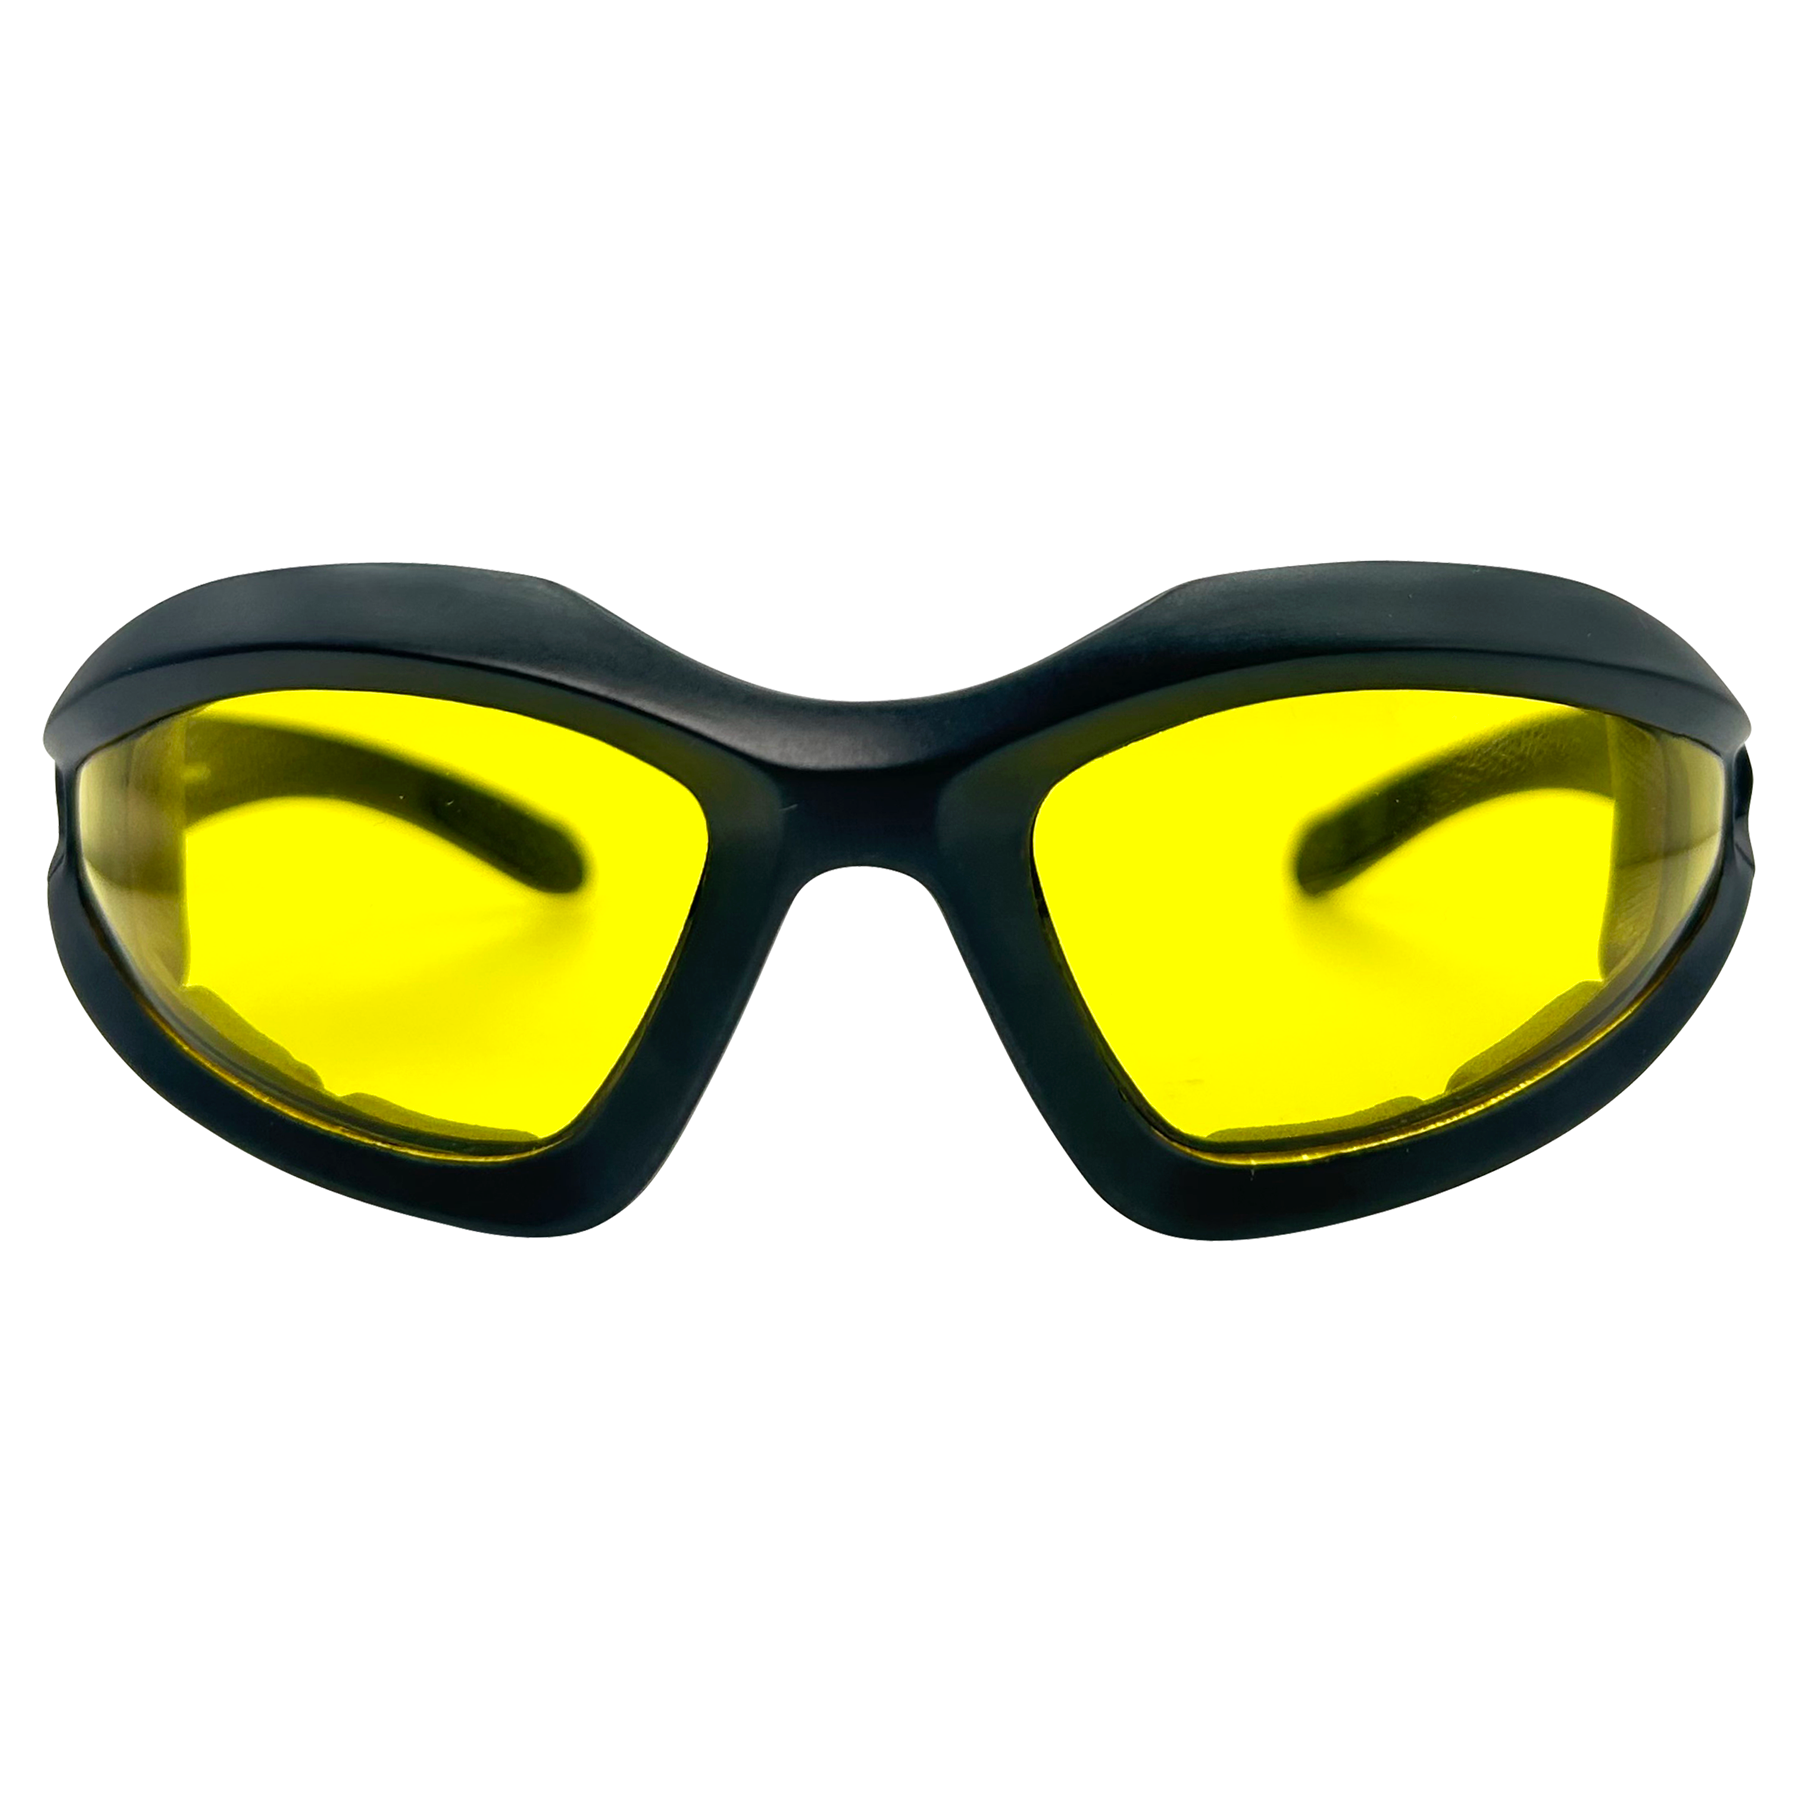 yellowflash lens sunglasses, sports shield style frame